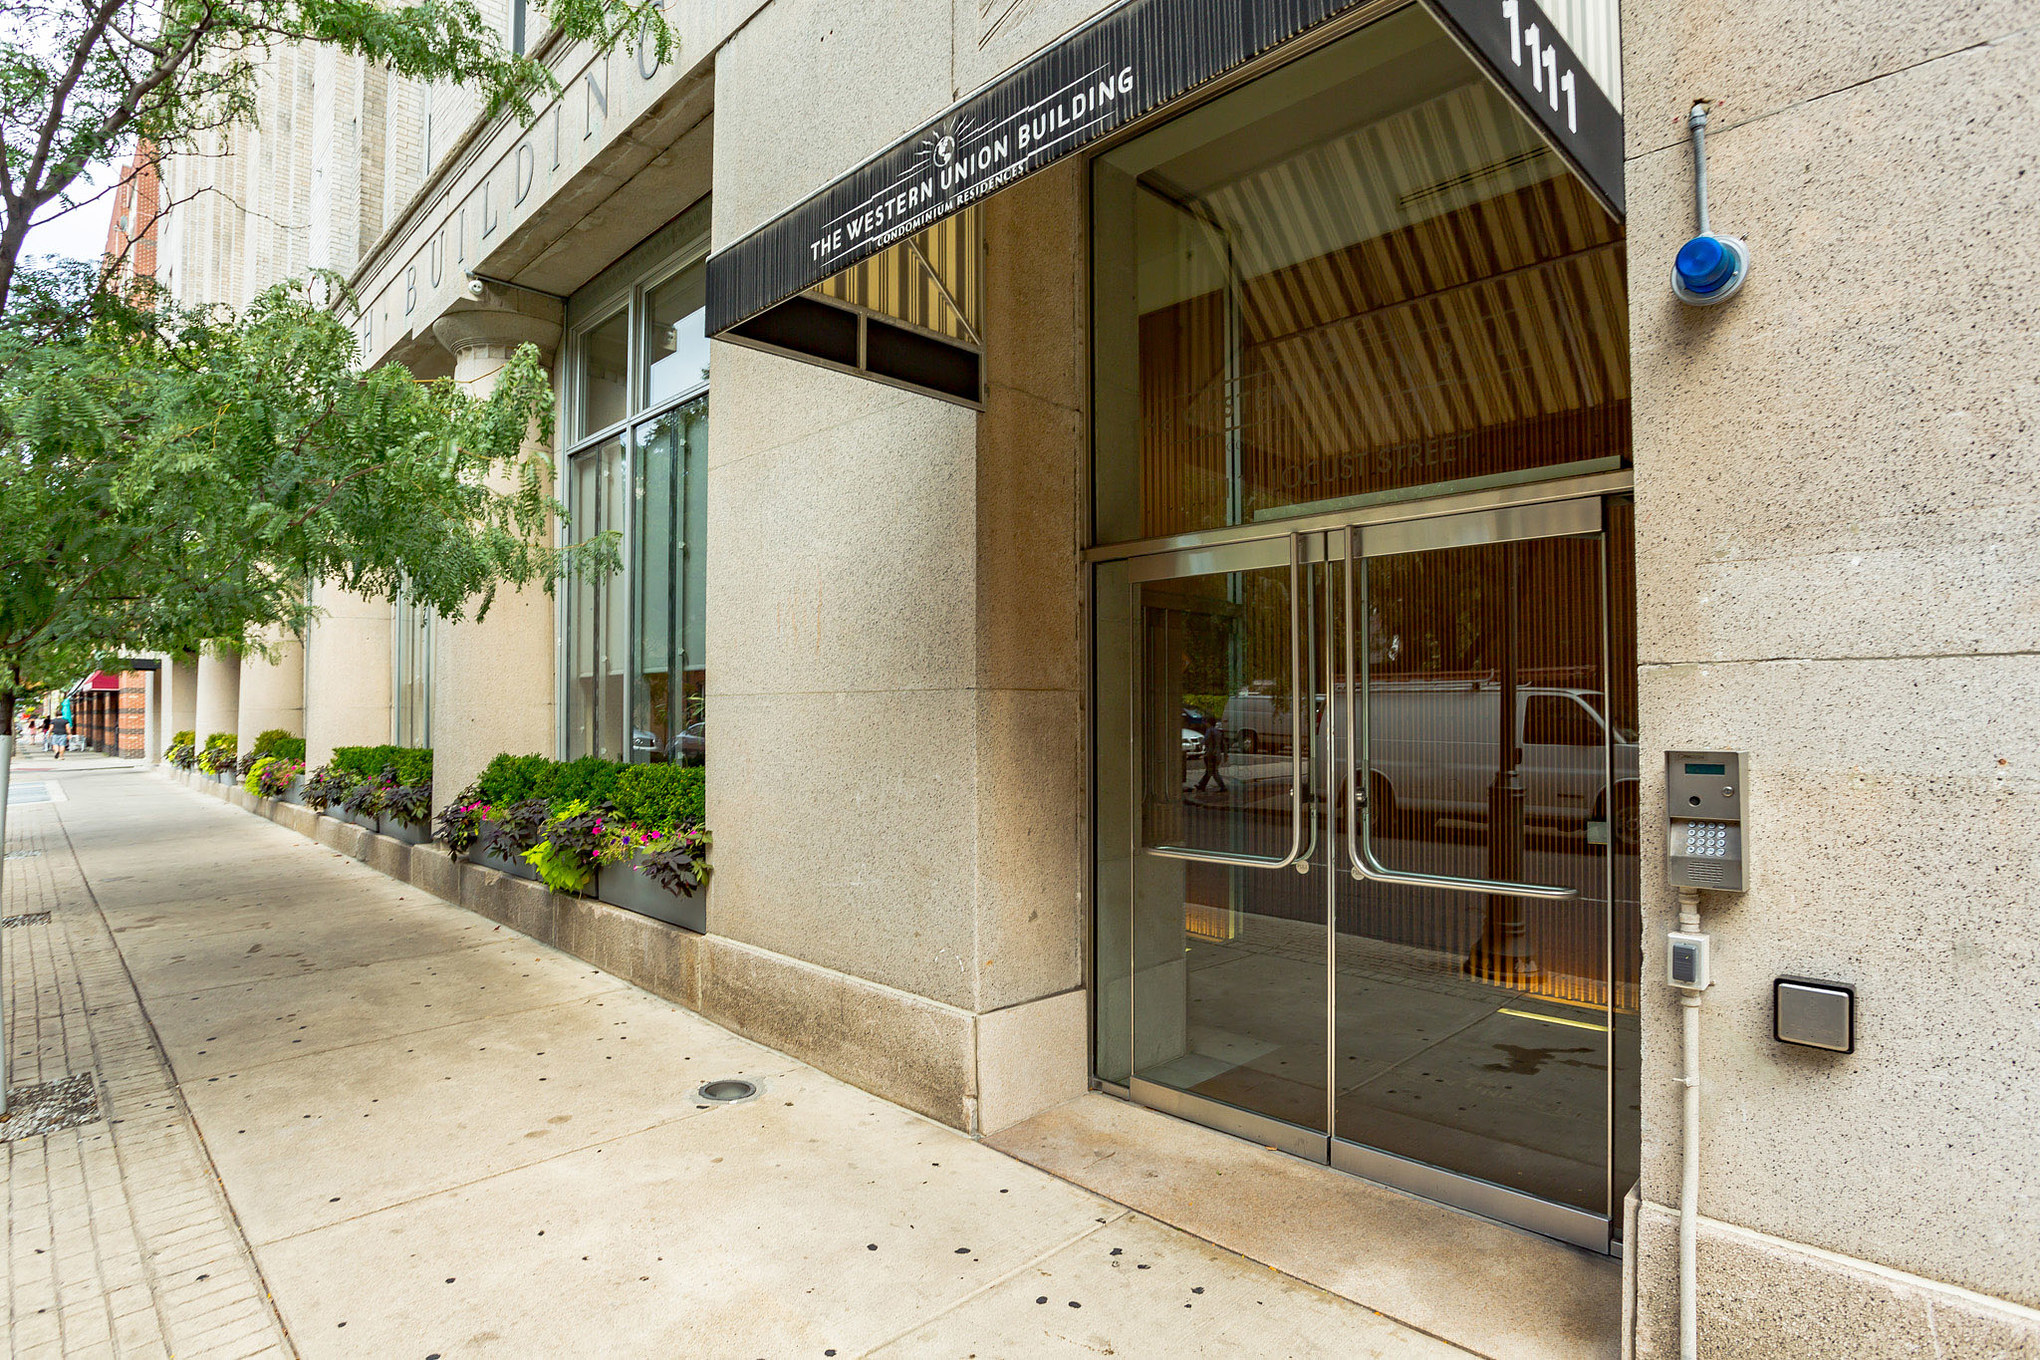 Entrance to The Western Union luxury condo building in Philadelphia